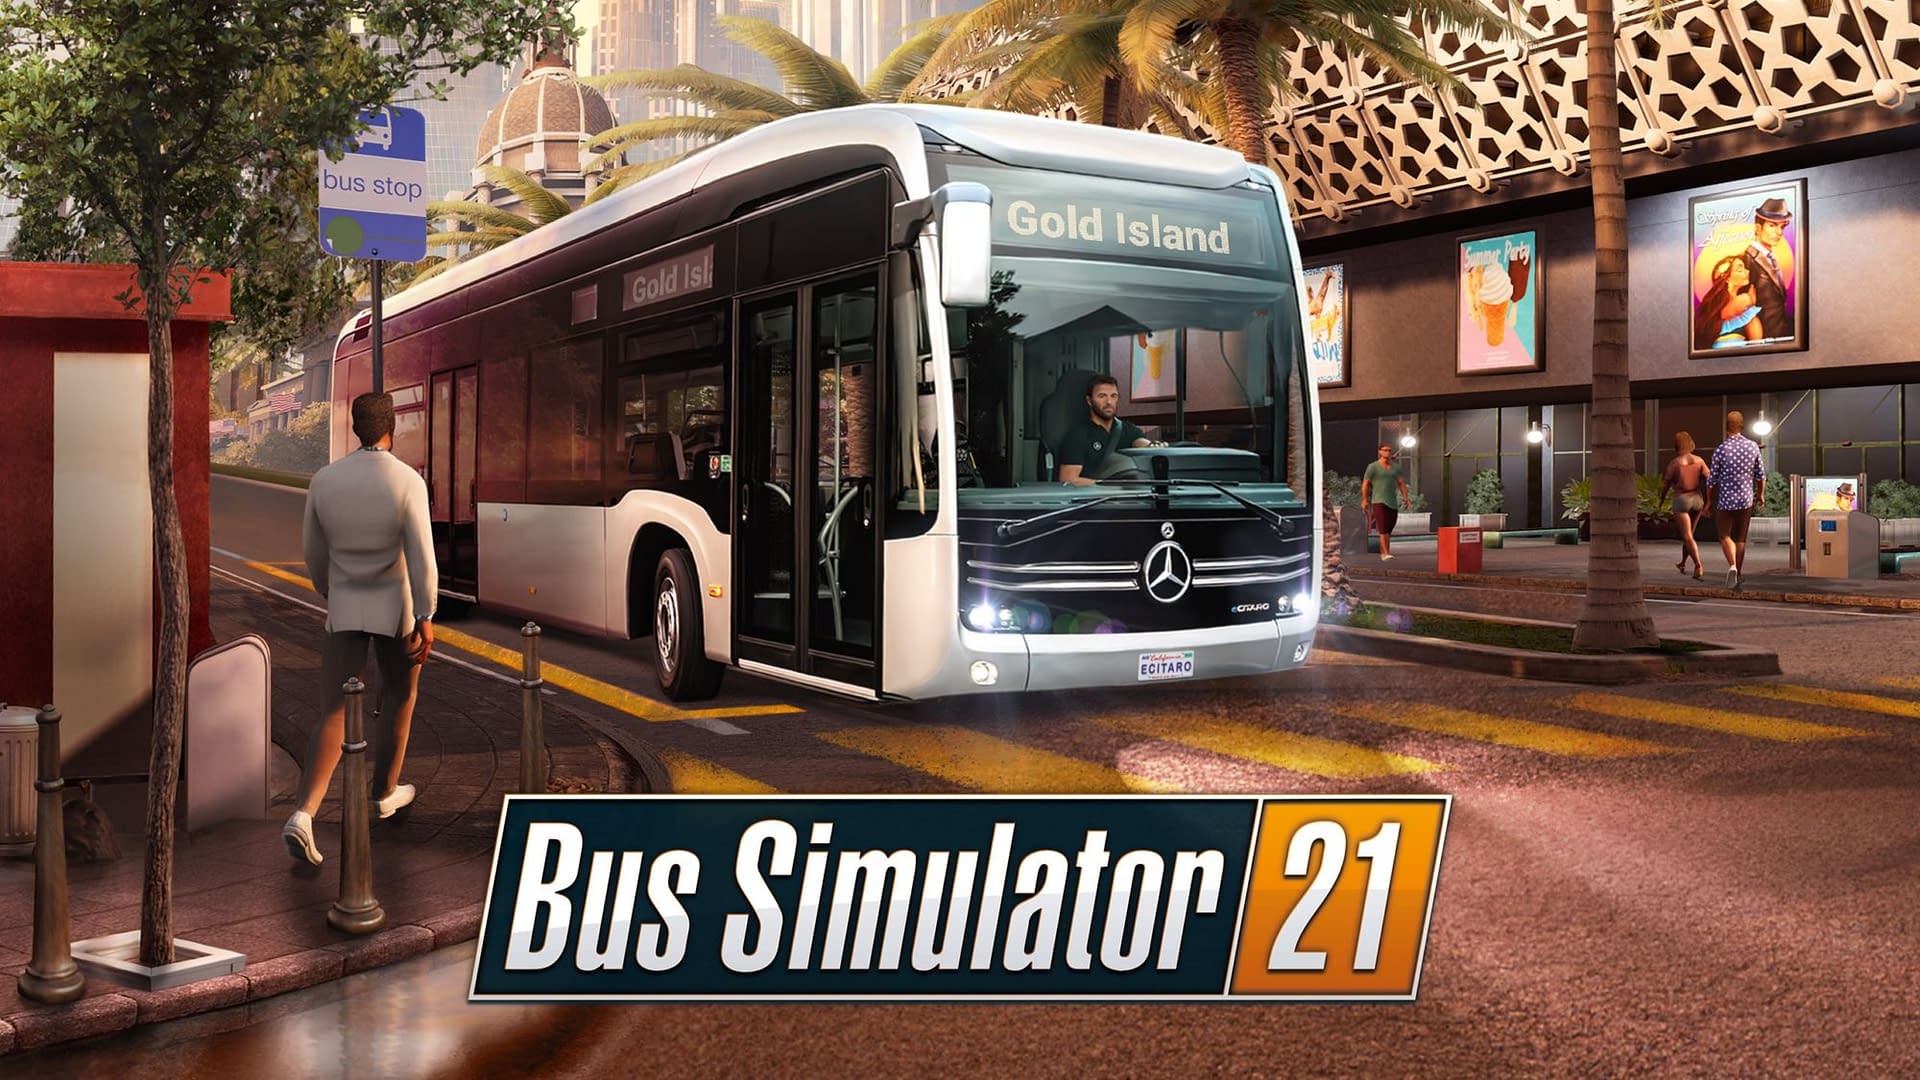 In Update Massive Simulator New Latest 21 Map Adds Bus